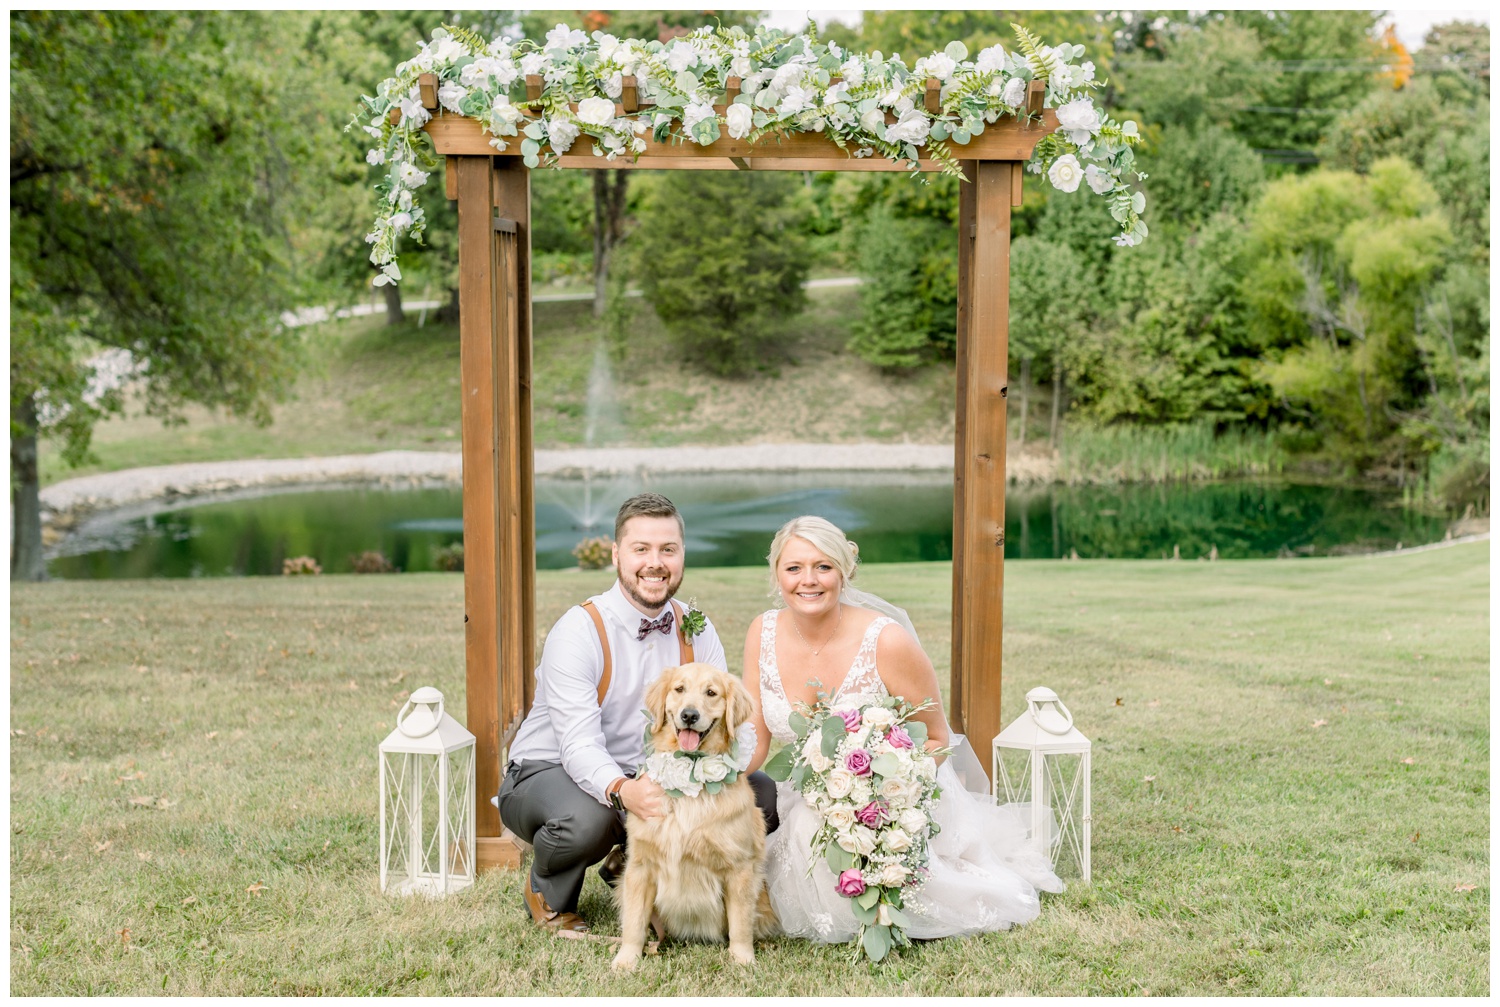 Bride and Groom with Dog at Backyard Wedding